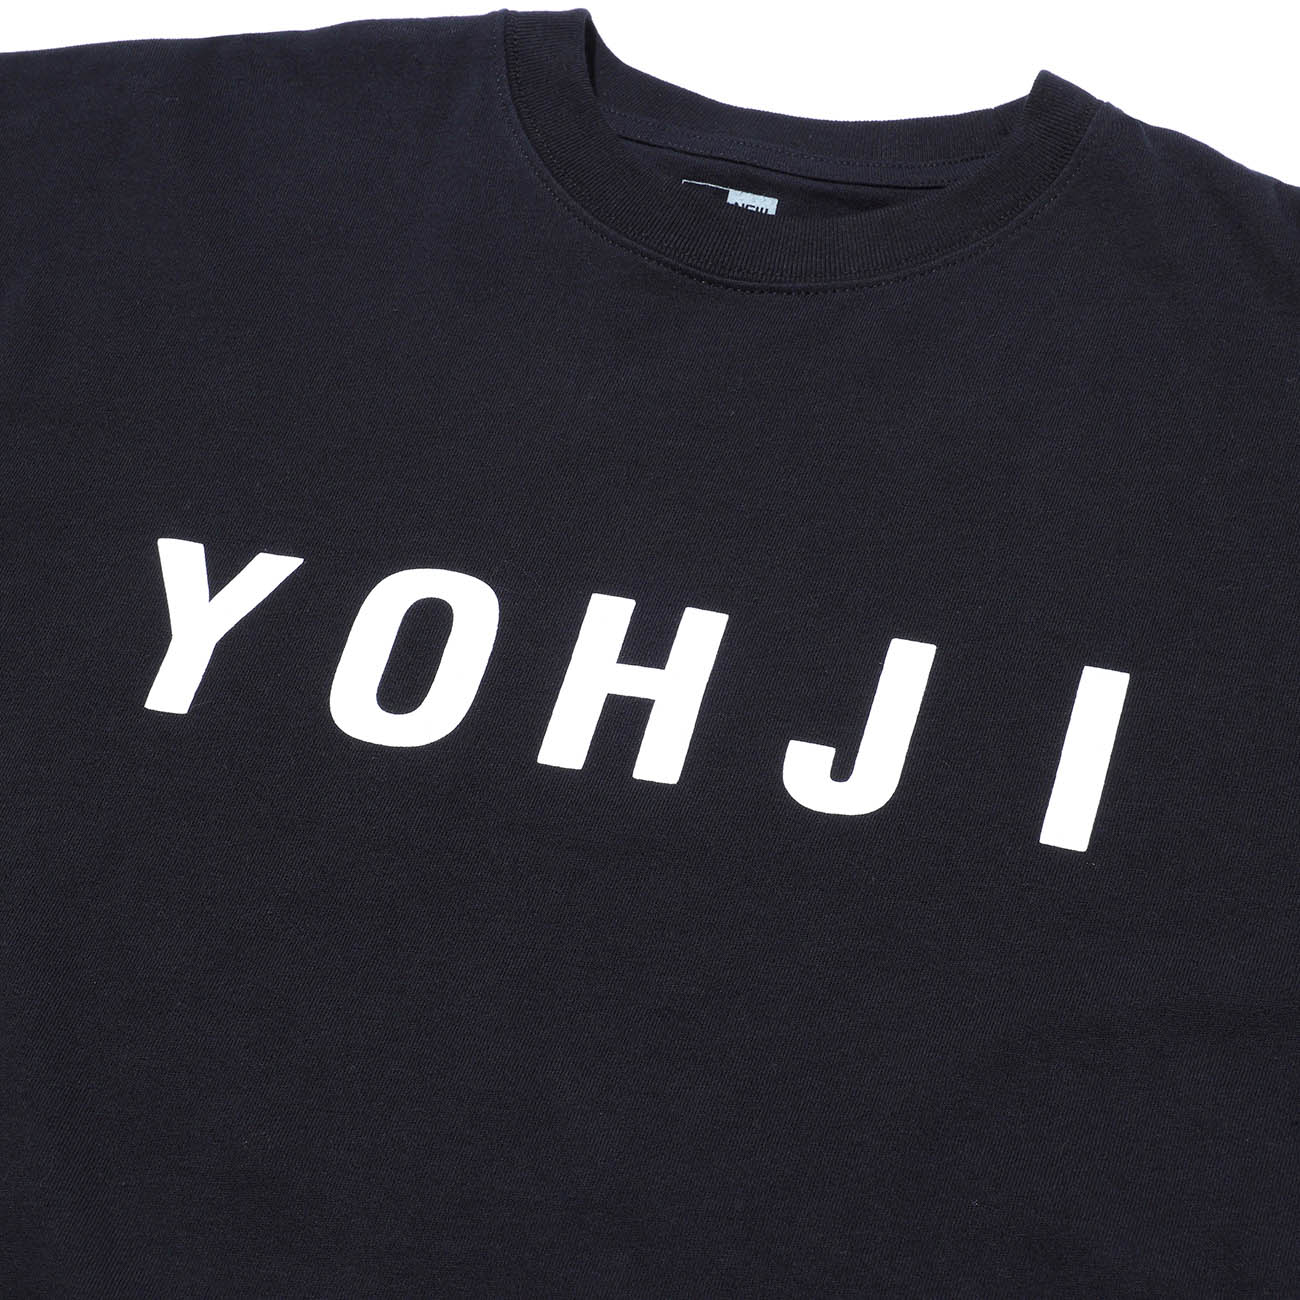 Yohji Yamamoto×New Era BLOCK TYPEFACE <YOHJI> PRINT SHORT SLEEVES